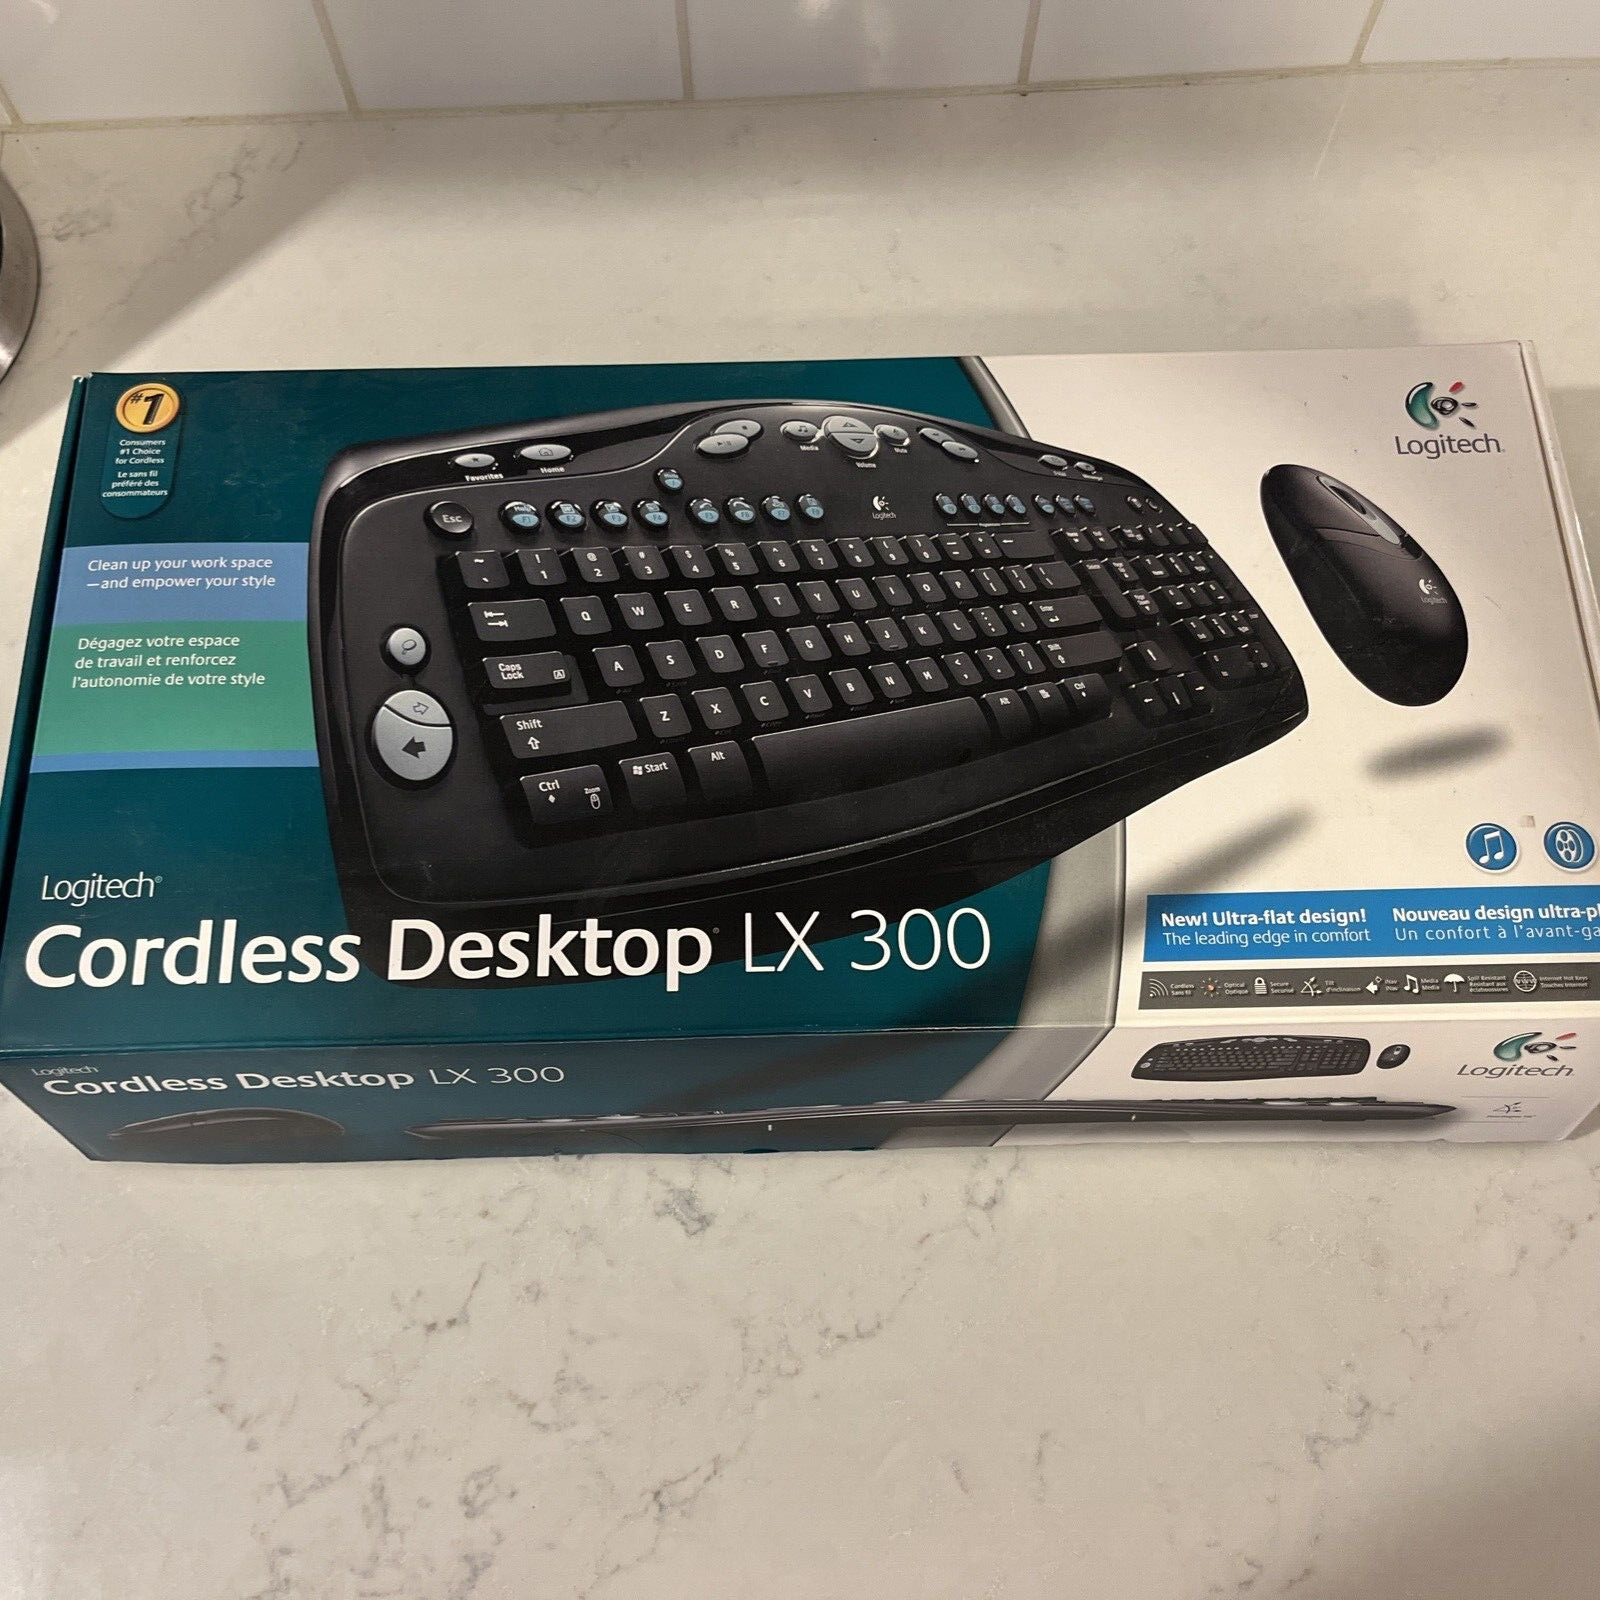 New Logitech Cordless Desktop LX 300 Keyboard & Mouse, Ultra-flat design